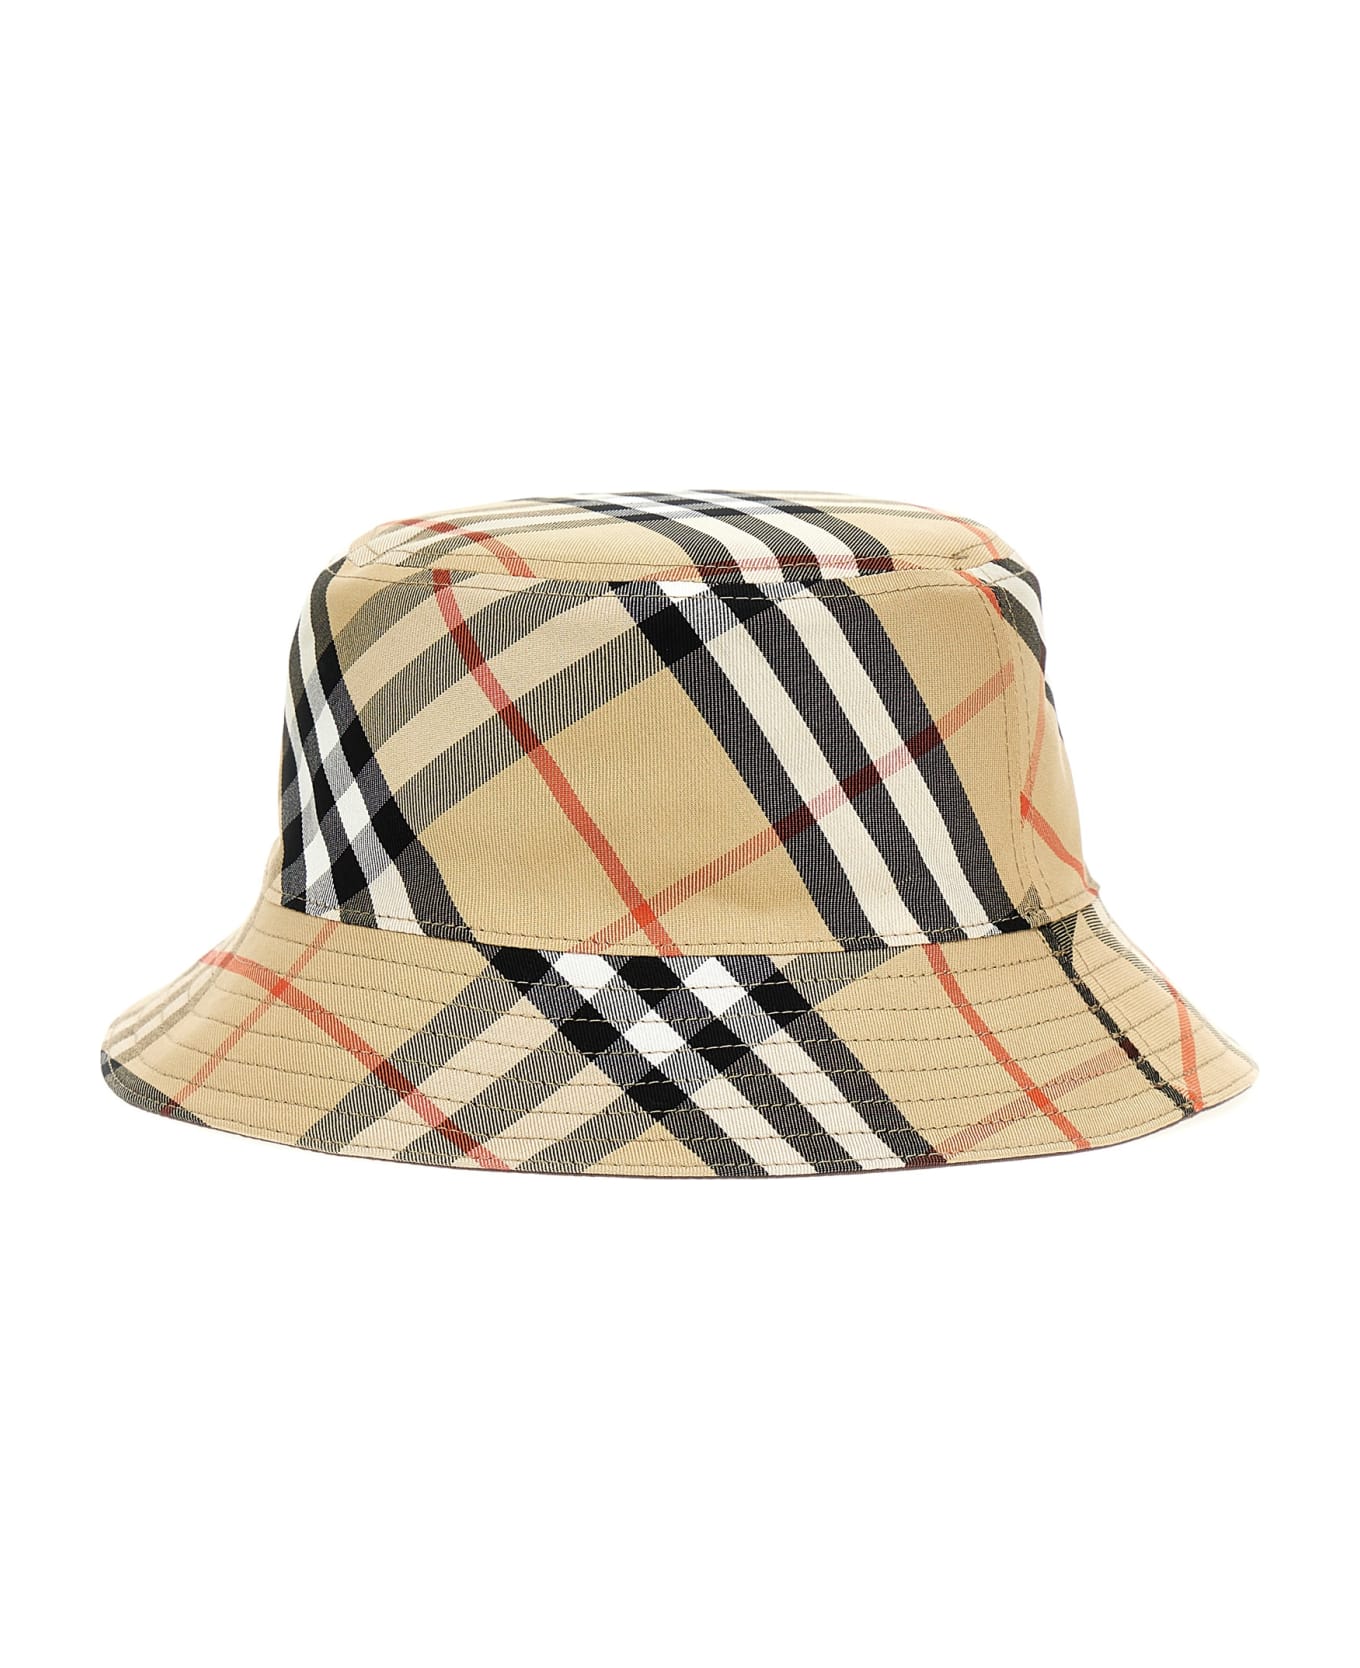 Burberry Reversible Bucket Hat - Multicolor